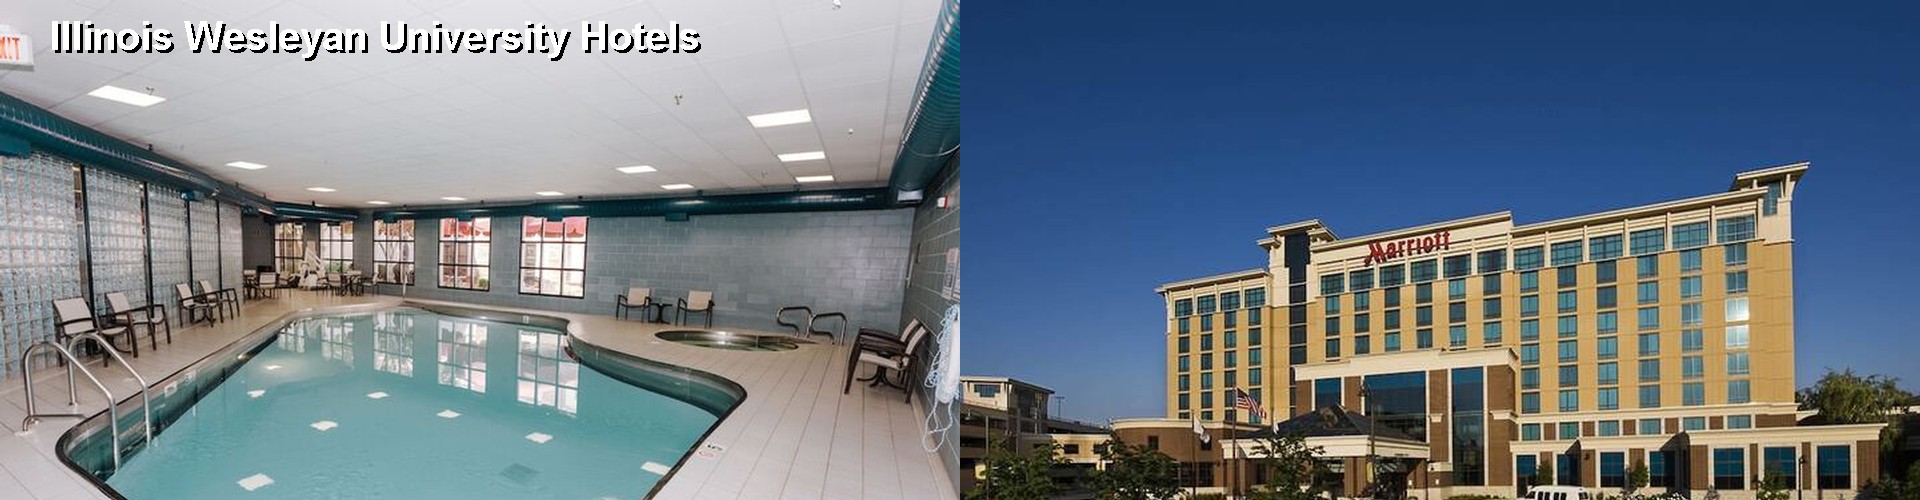 5 Best Hotels near Illinois Wesleyan University